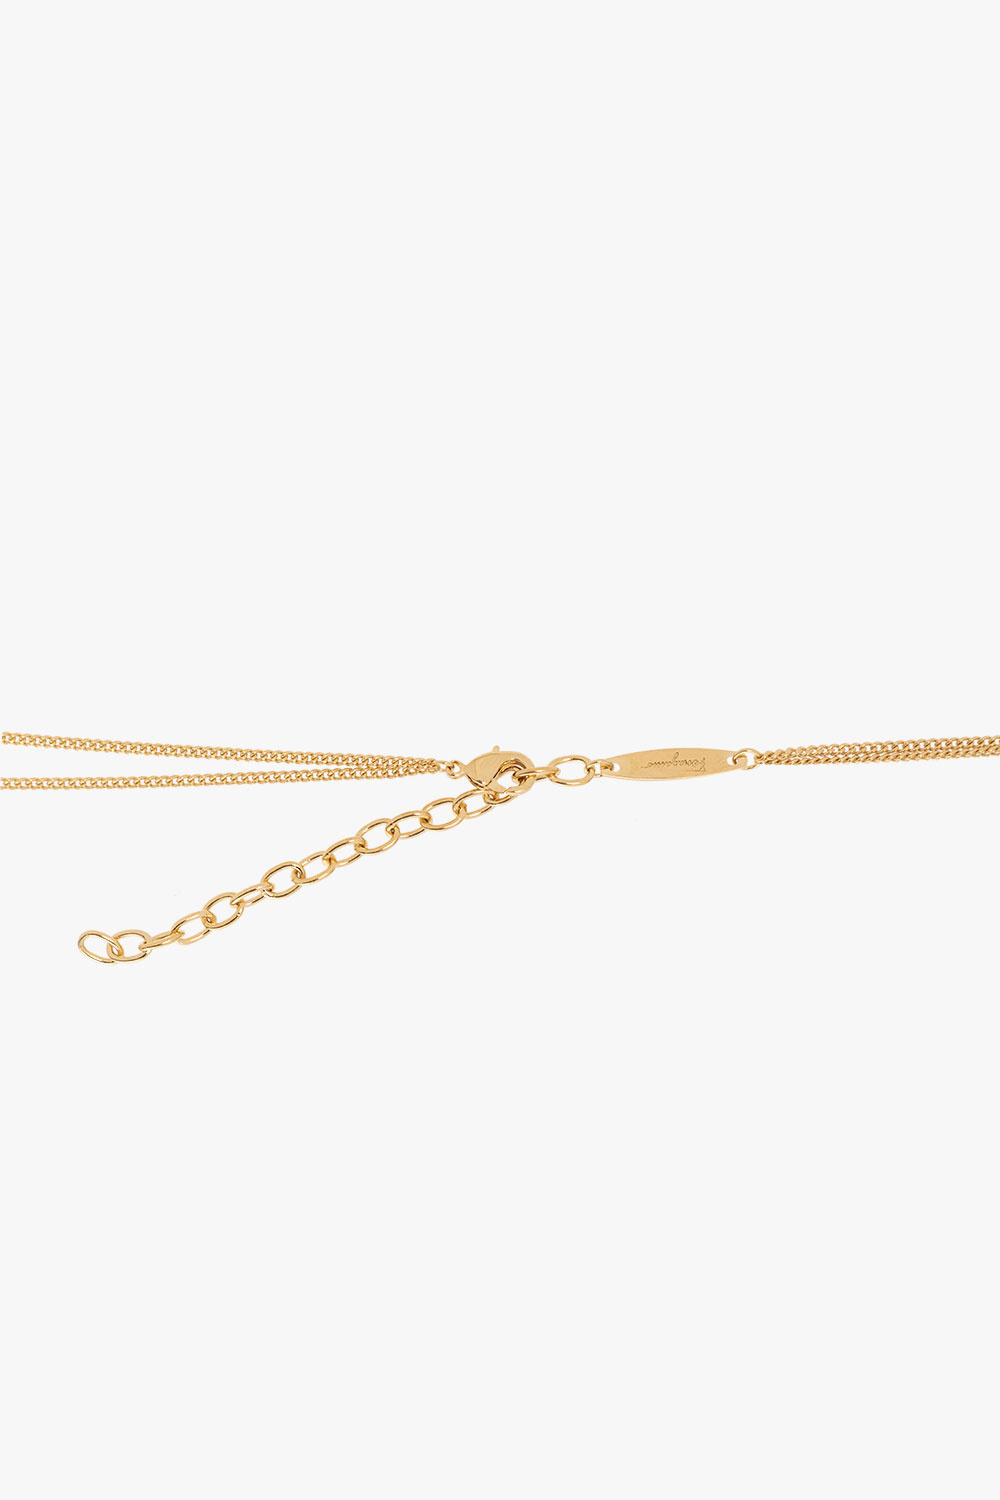 Salvatore Ferragamo Brass necklace